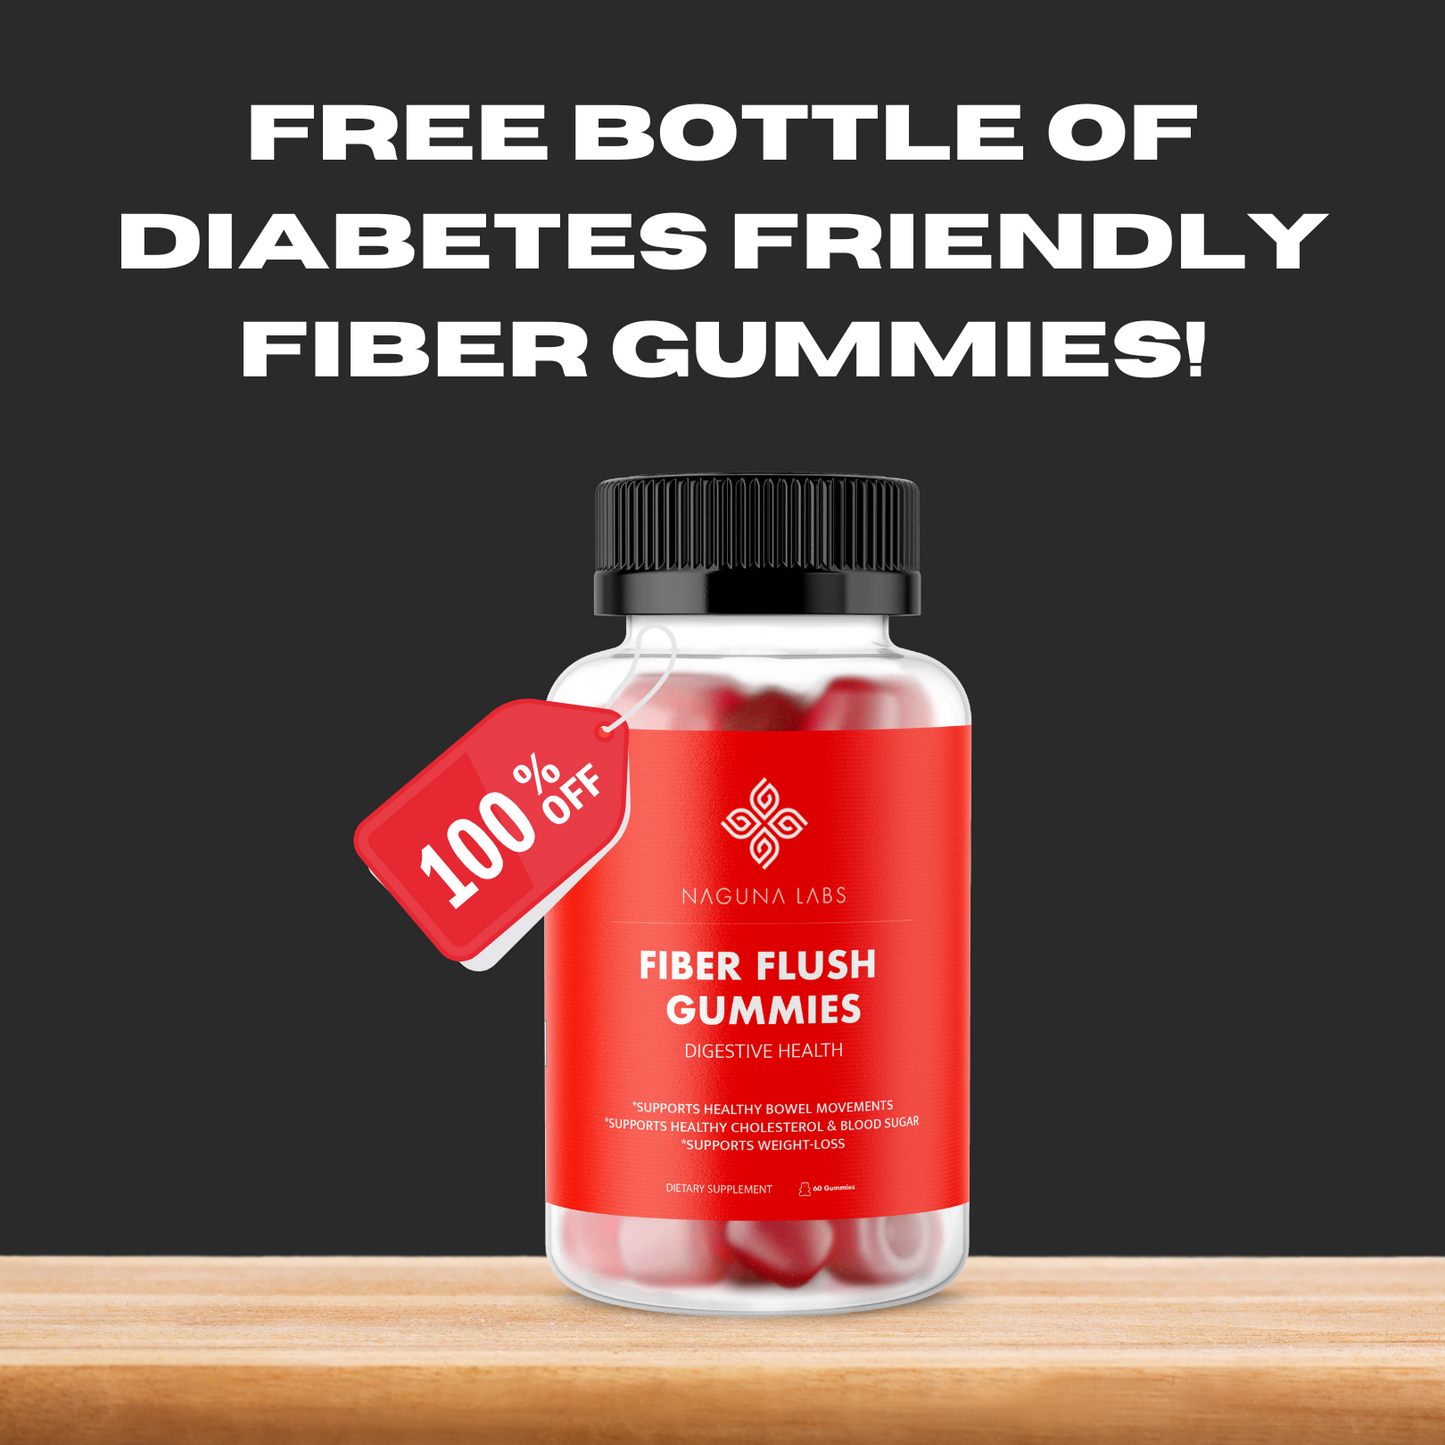 Three Months Of Blood Sugar Stabilizers & A Free Diabetes Friendly Fiber Gummy!